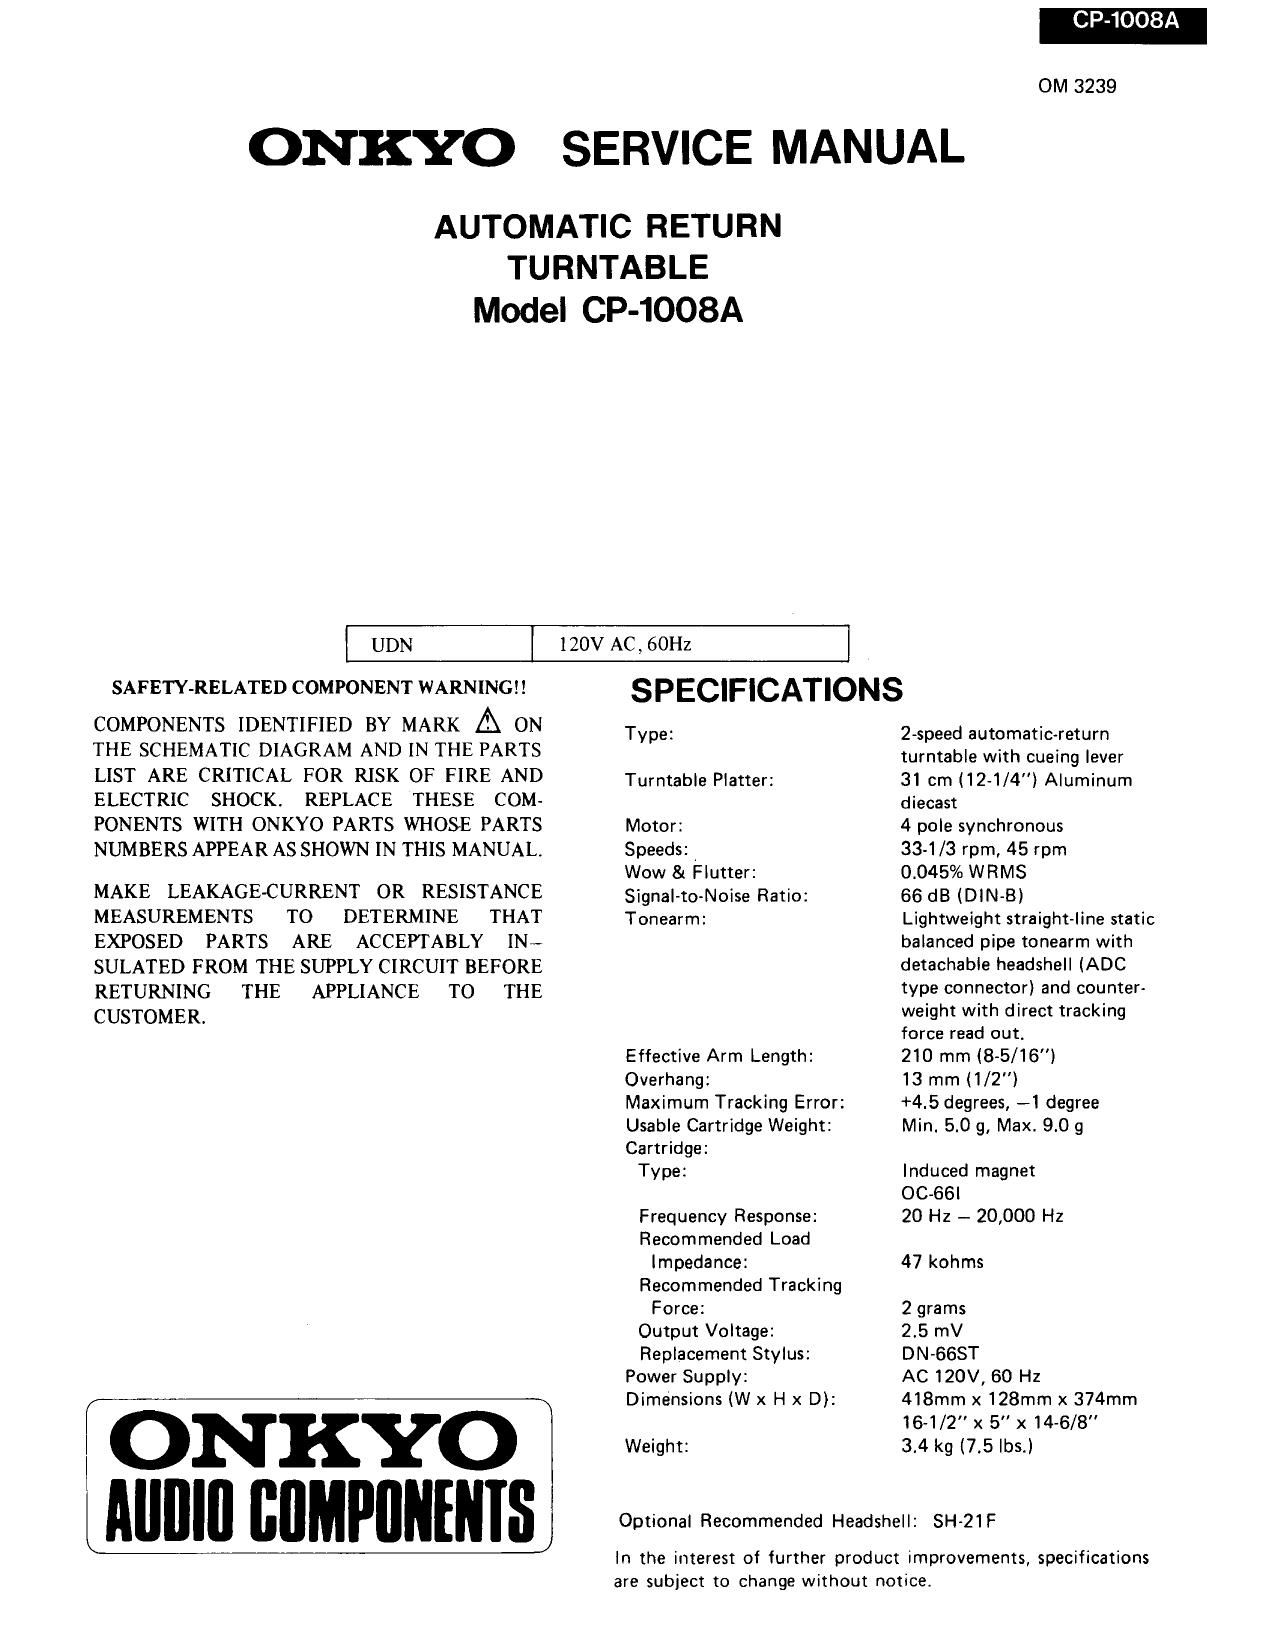 Onkyo CP 1008 A Service Manual